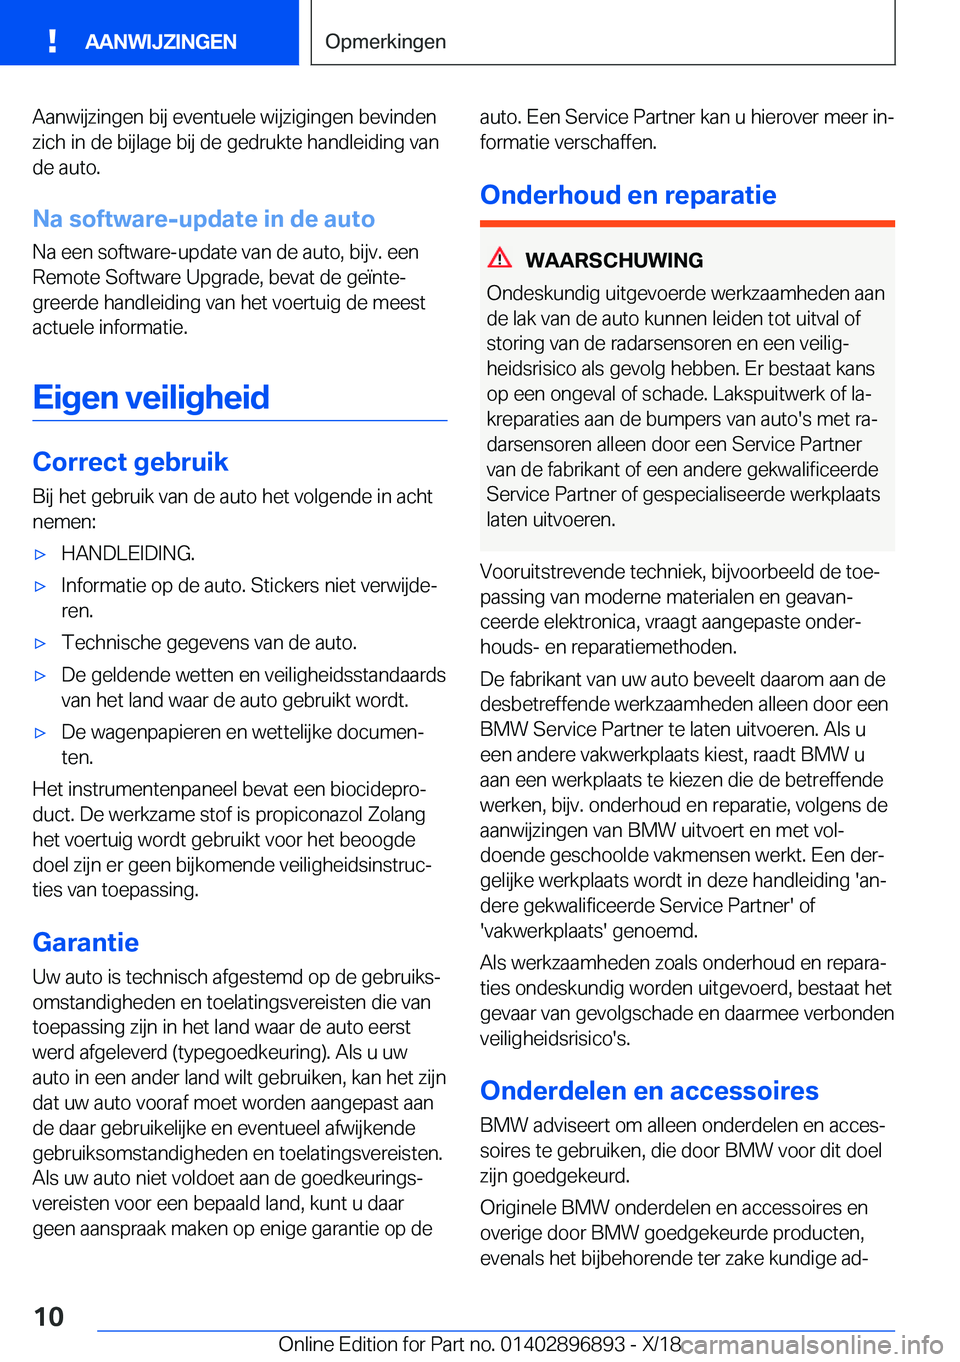 BMW 8 SERIES COUPE 2019  Instructieboekjes (in Dutch) �A�a�n�w�i�j�z�i�n�g�e�n��b�i�j��e�v�e�n�t�u�e�l�e��w�i�j�z�i�g�i�n�g�e�n��b�e�v�i�n�d�e�n�z�i�c�h��i�n��d�e��b�i�j�l�a�g�e��b�i�j��d�e��g�e�d�r�u�k�t�e��h�a�n�d�l�e�i�d�i�n�g��v�a�n
�d�e�